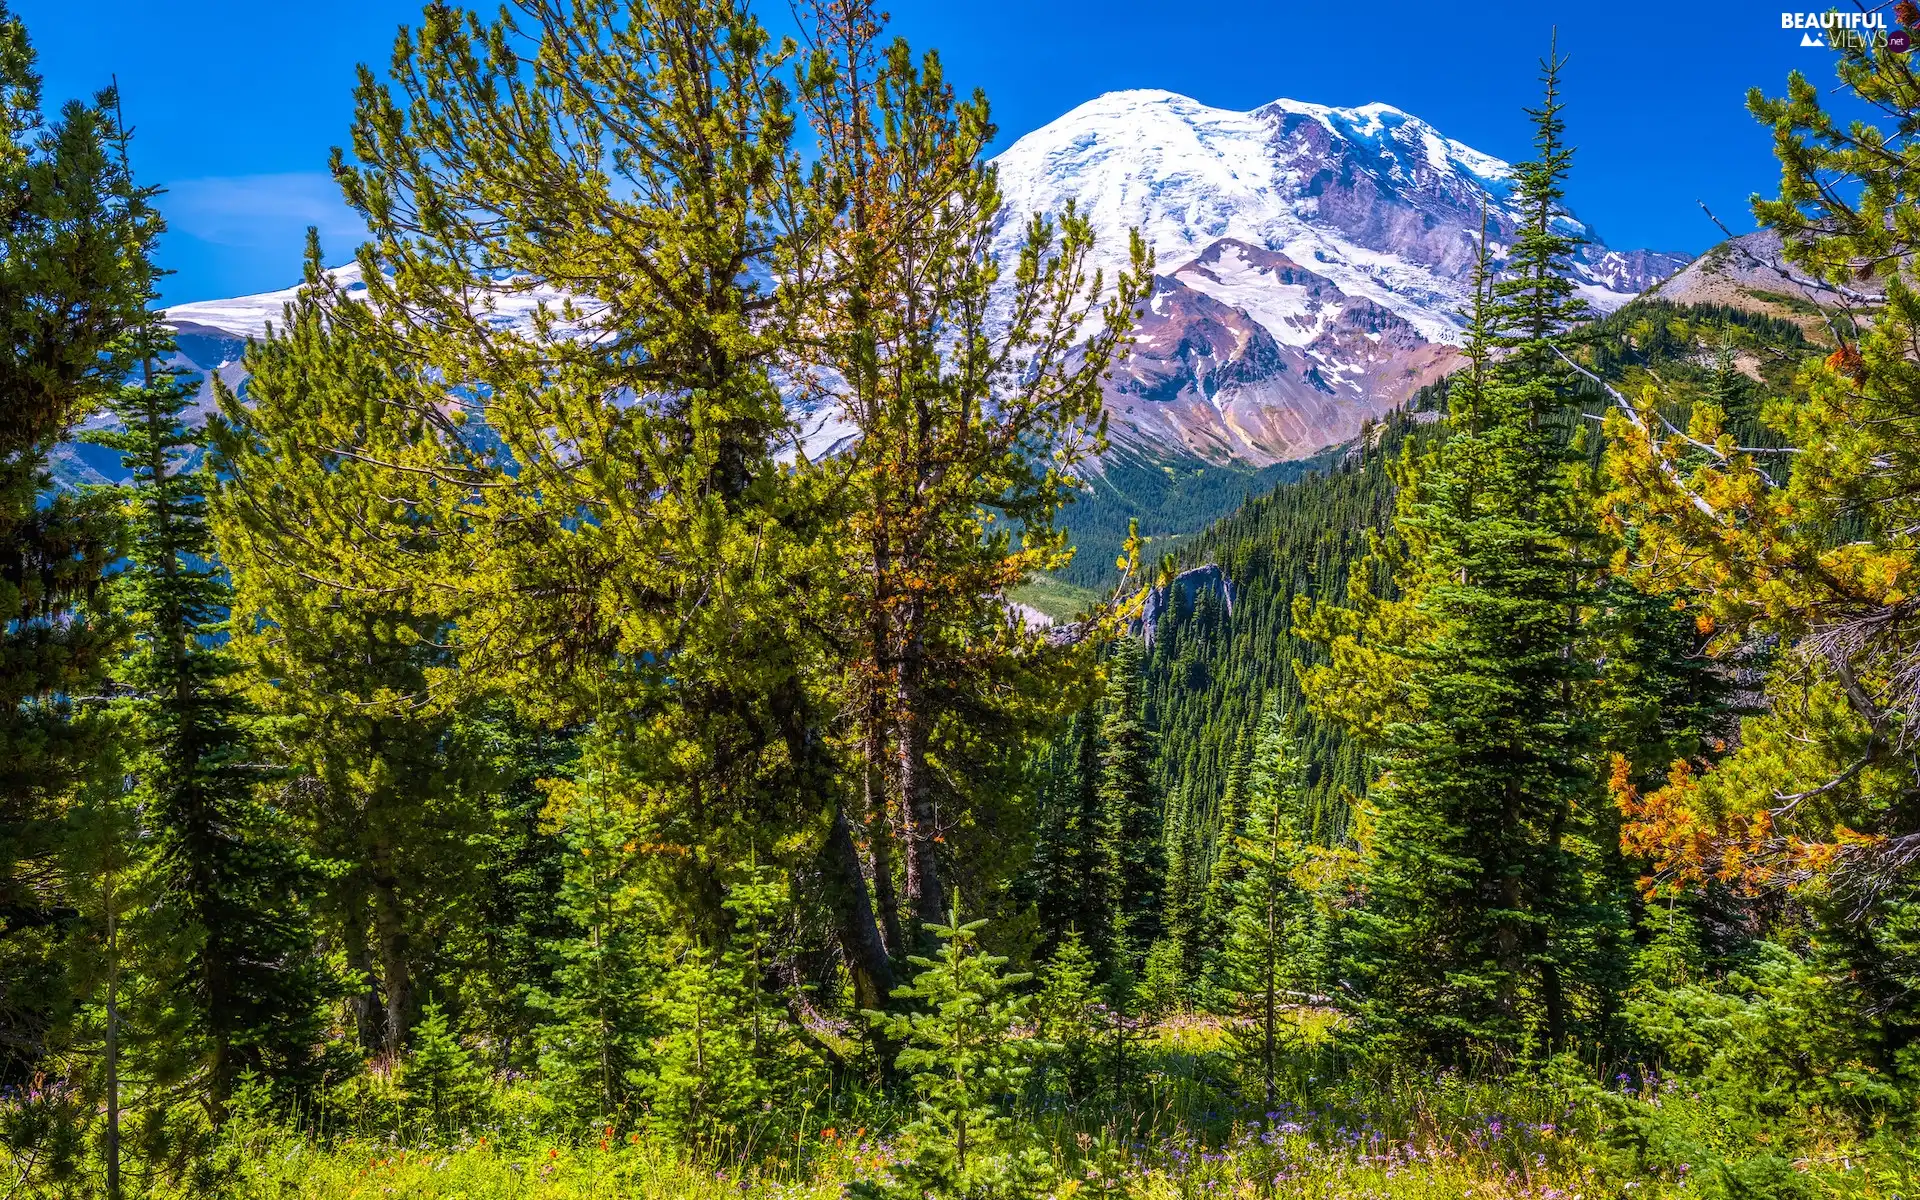 Snowy, Mountains, peaks, trees, Washington State, The United States, Plants, Mount Rainier National Park, viewes